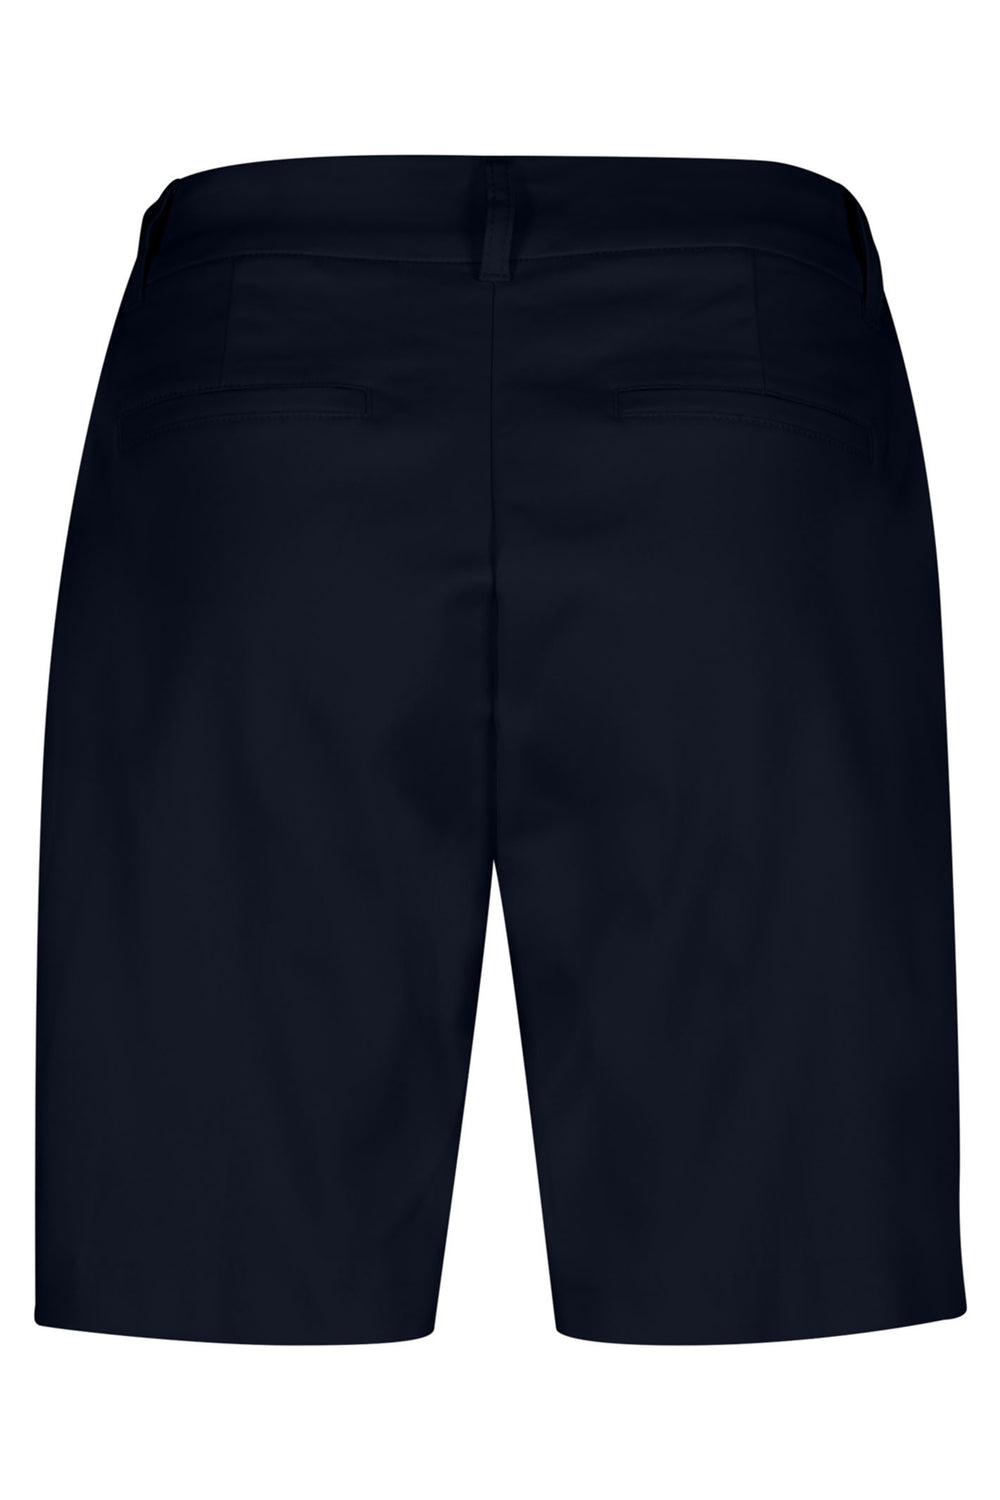 Red Button SRB4176 Ava Navy Smart Shorts 21cm - Olivia Grace Fashion